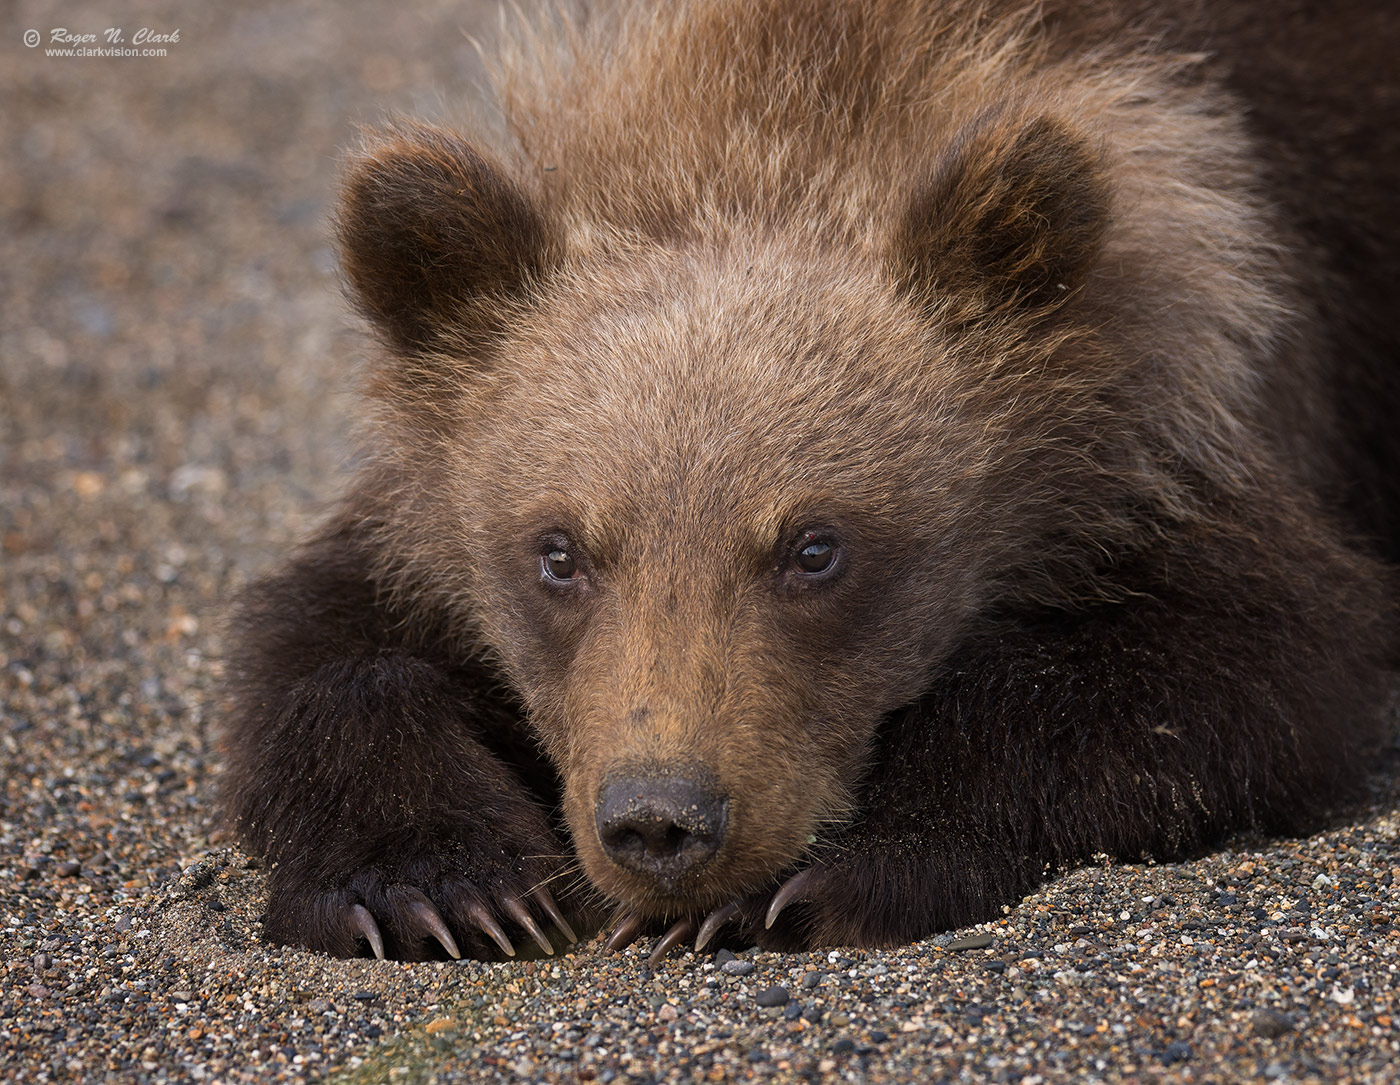 image bear-cub-laying-cute-c08-20-2023-1C-4C3A9522.d-1400s.jpg is Copyrighted by Roger N. Clark, www.clarkvision.com